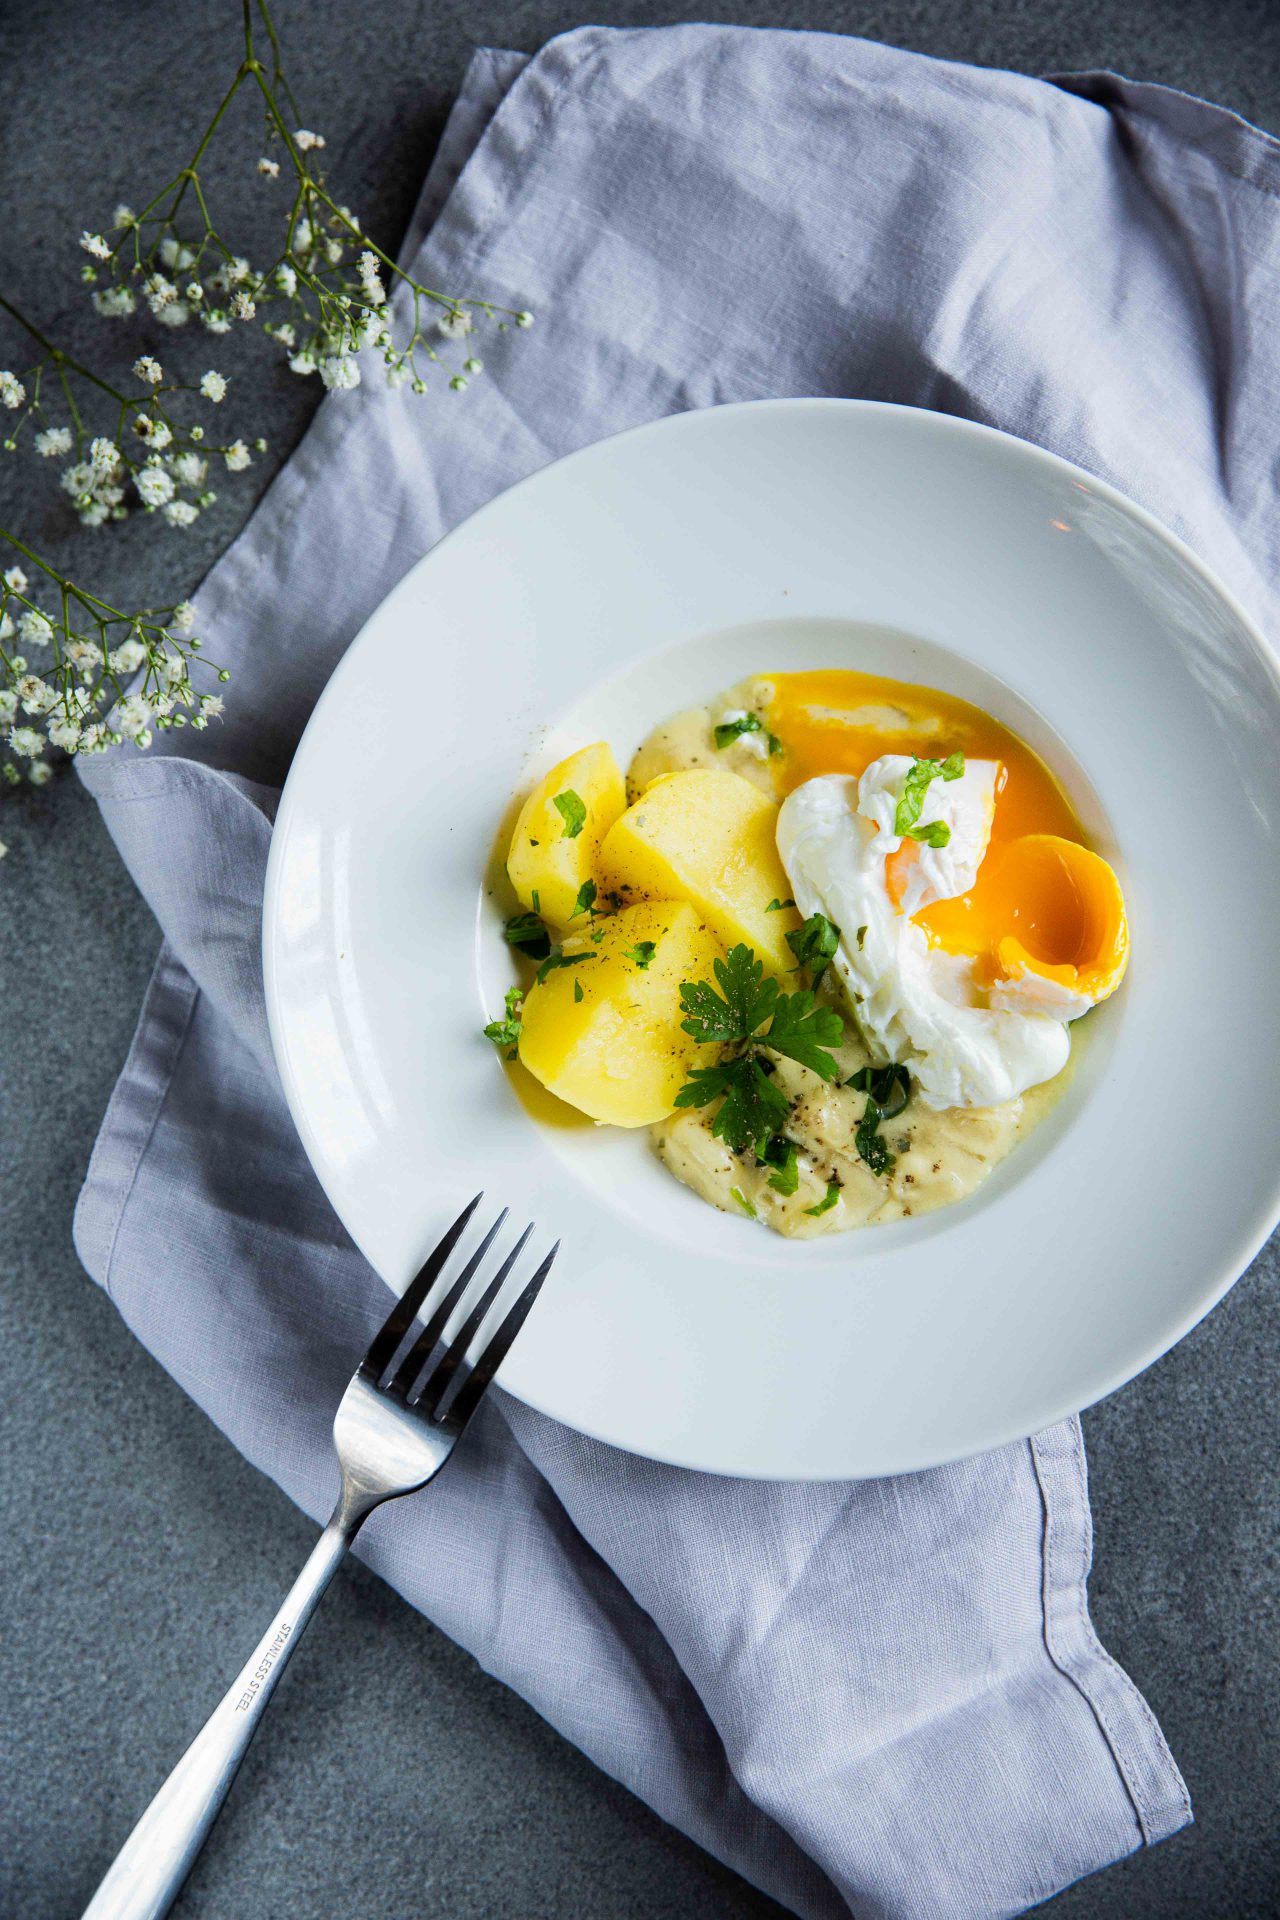 Verlorene Eier Mit Kräuter Senf Mayonnaise — Rezepte Suchen